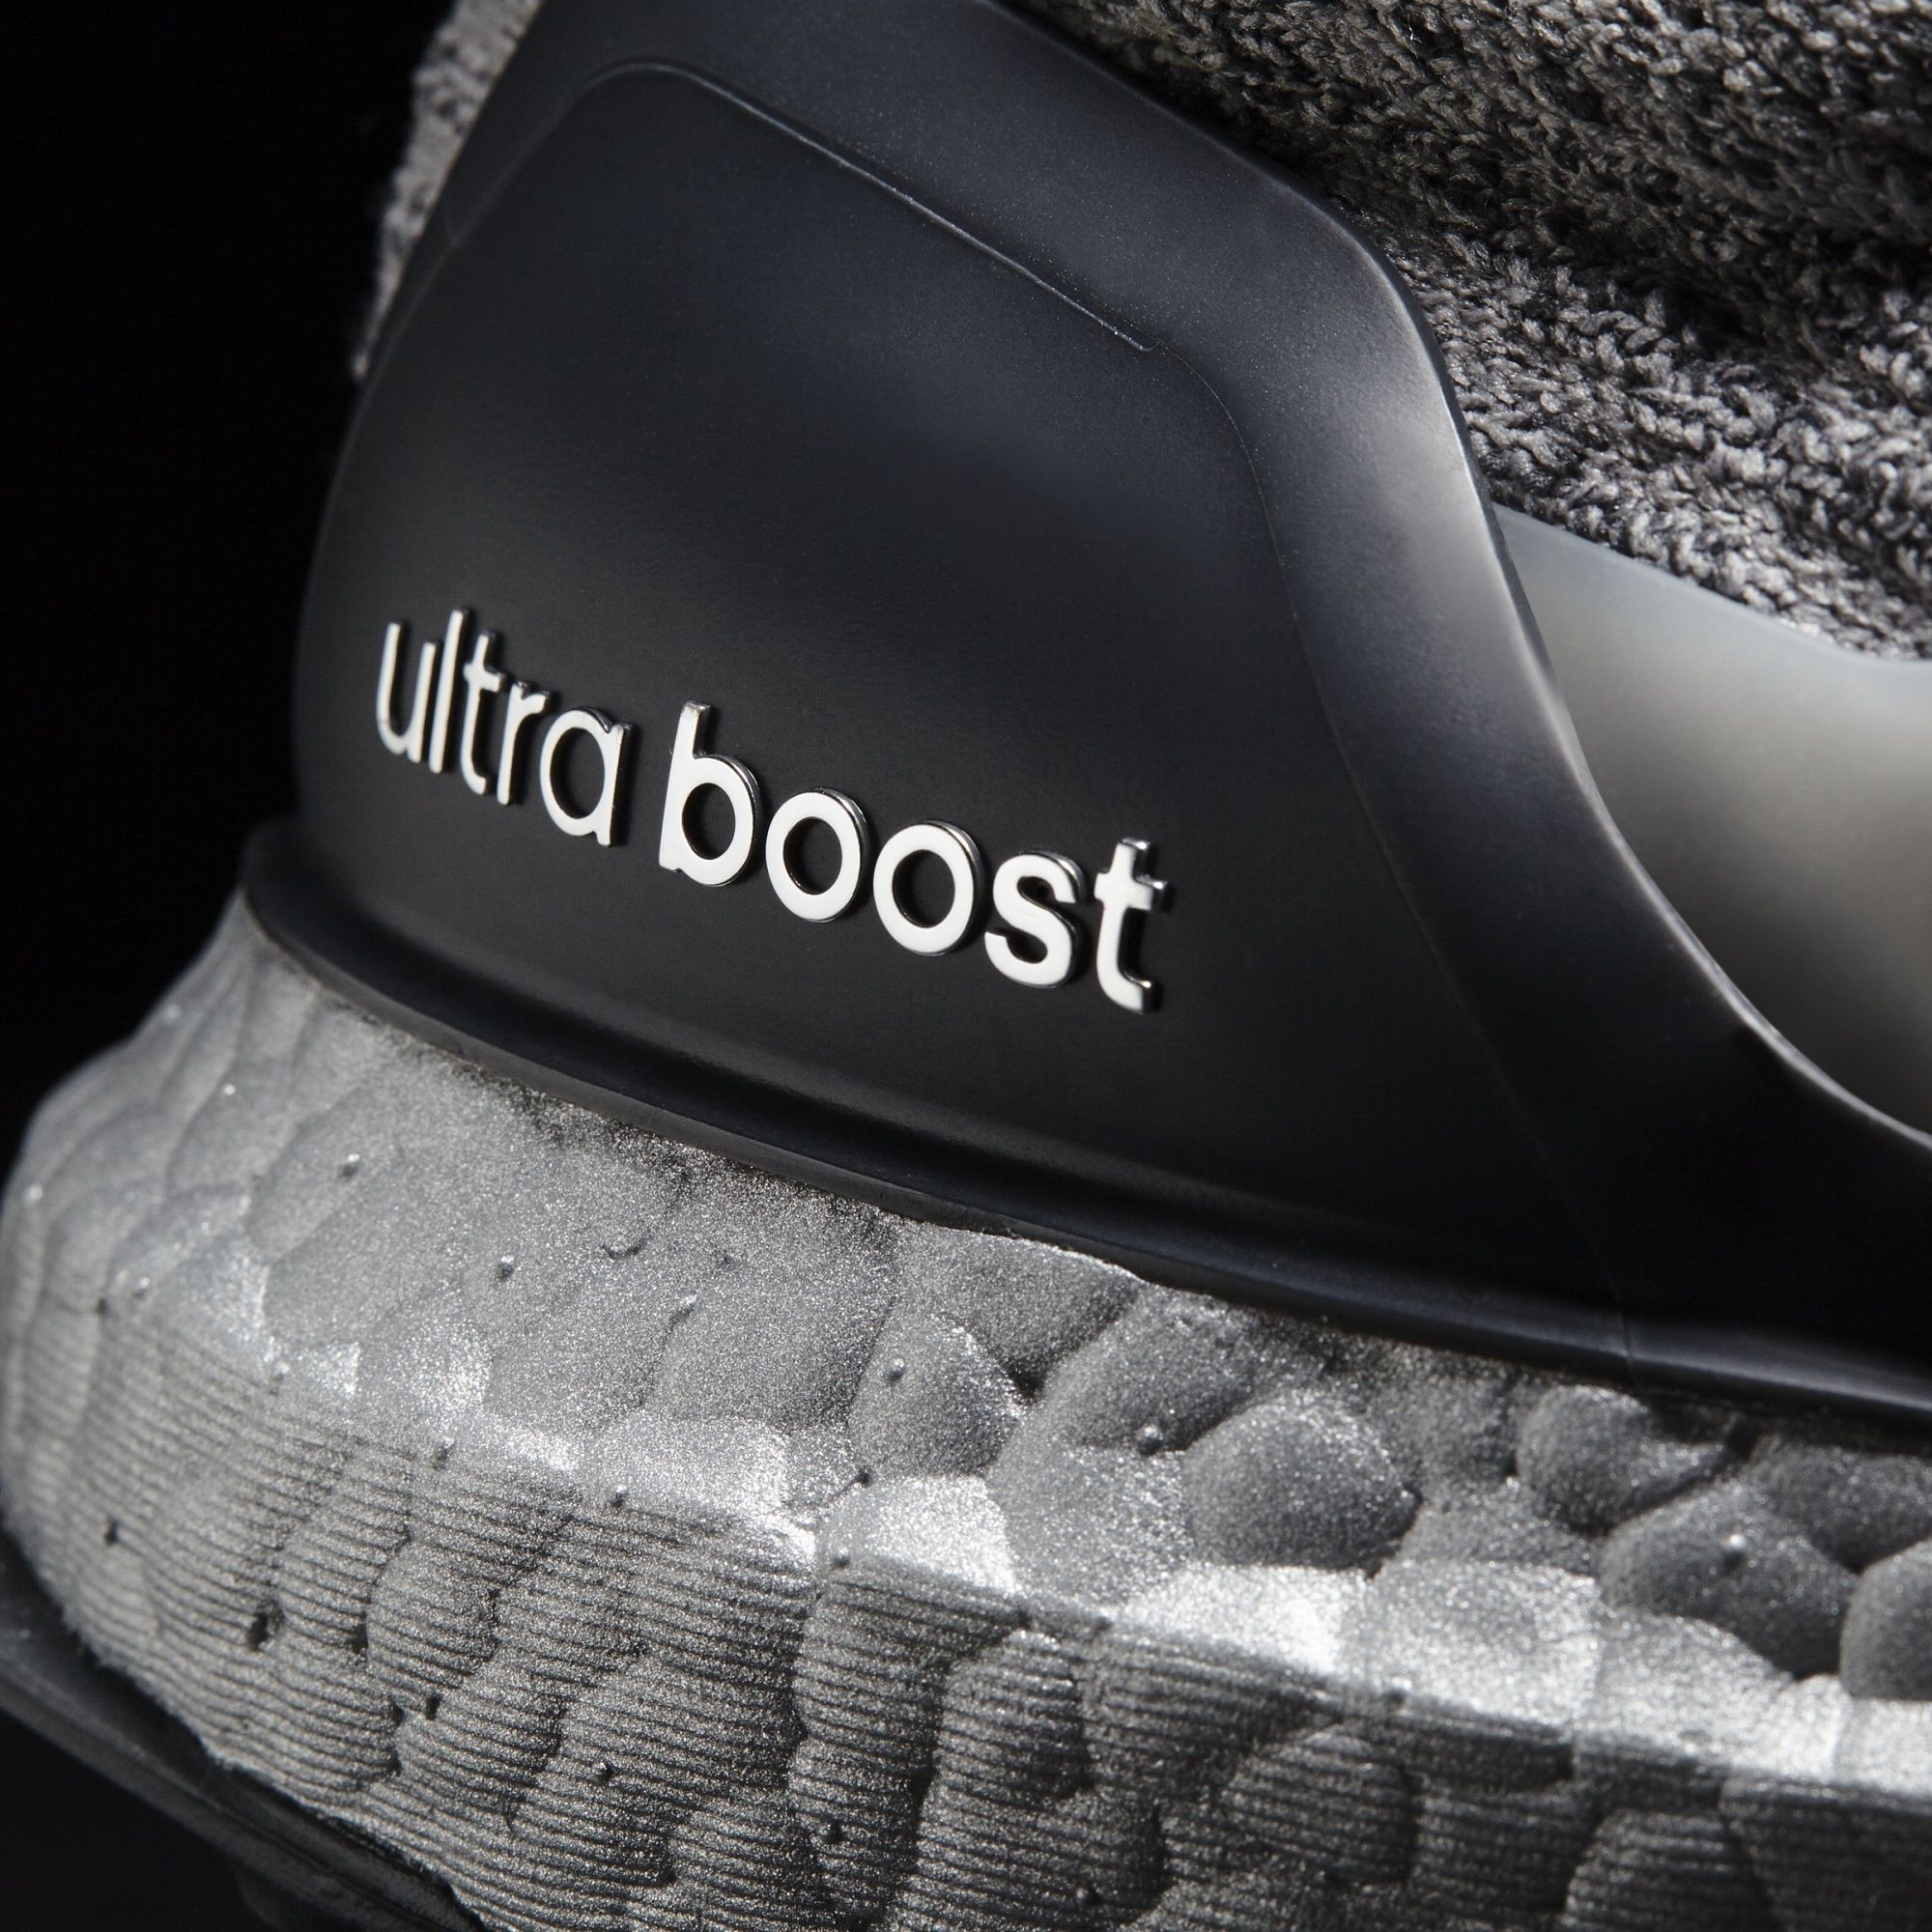 Adidas UltraBOOST 3.0
« Superbowl Edition »